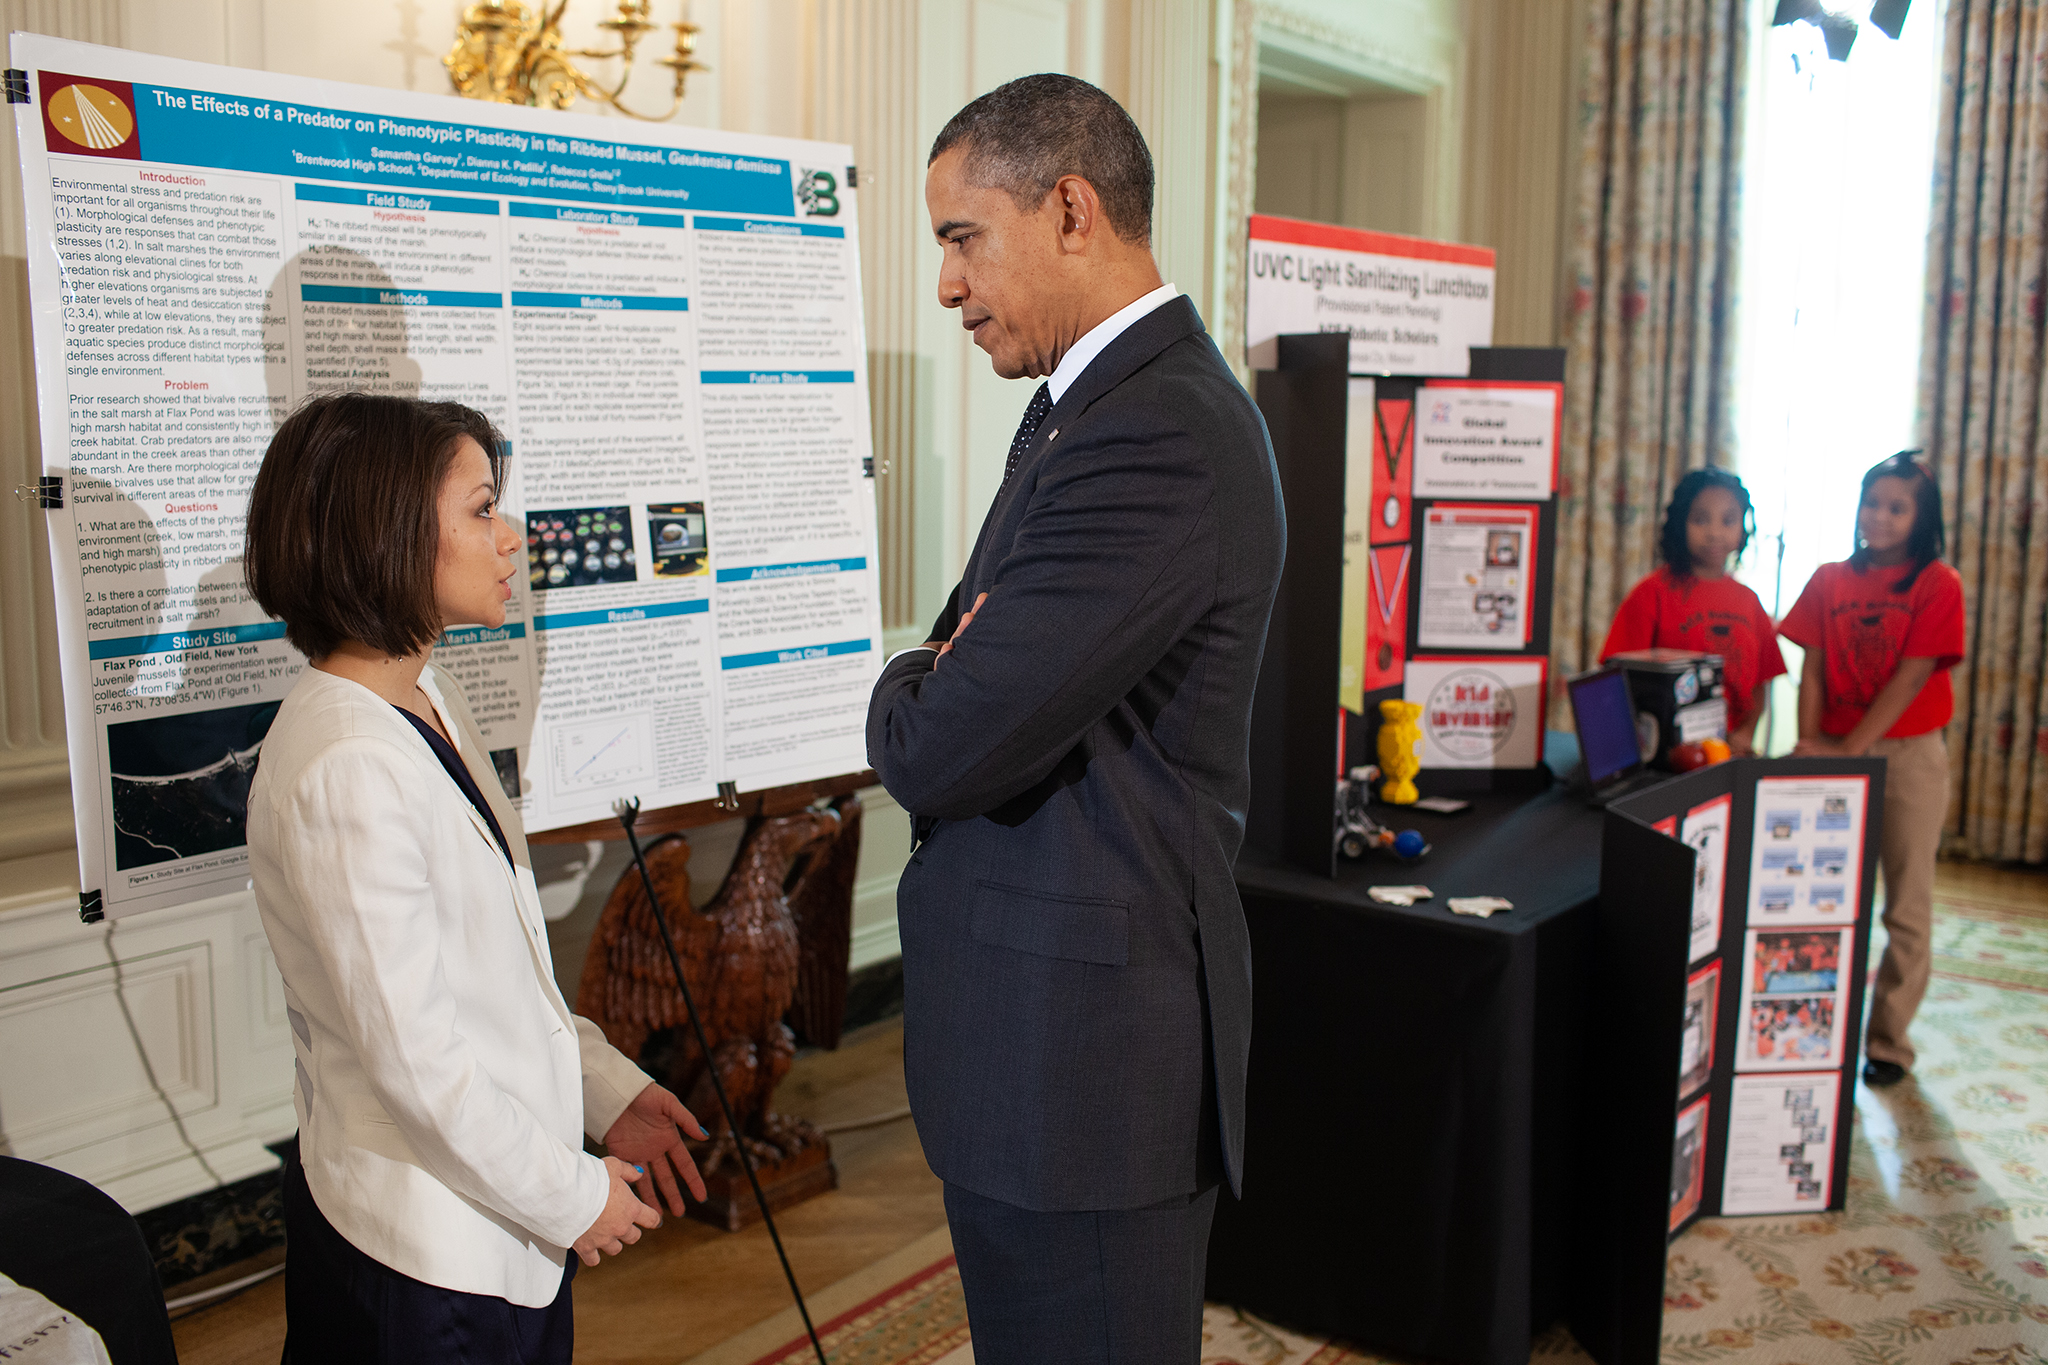 Samantha Garvey explains her research to President Obama